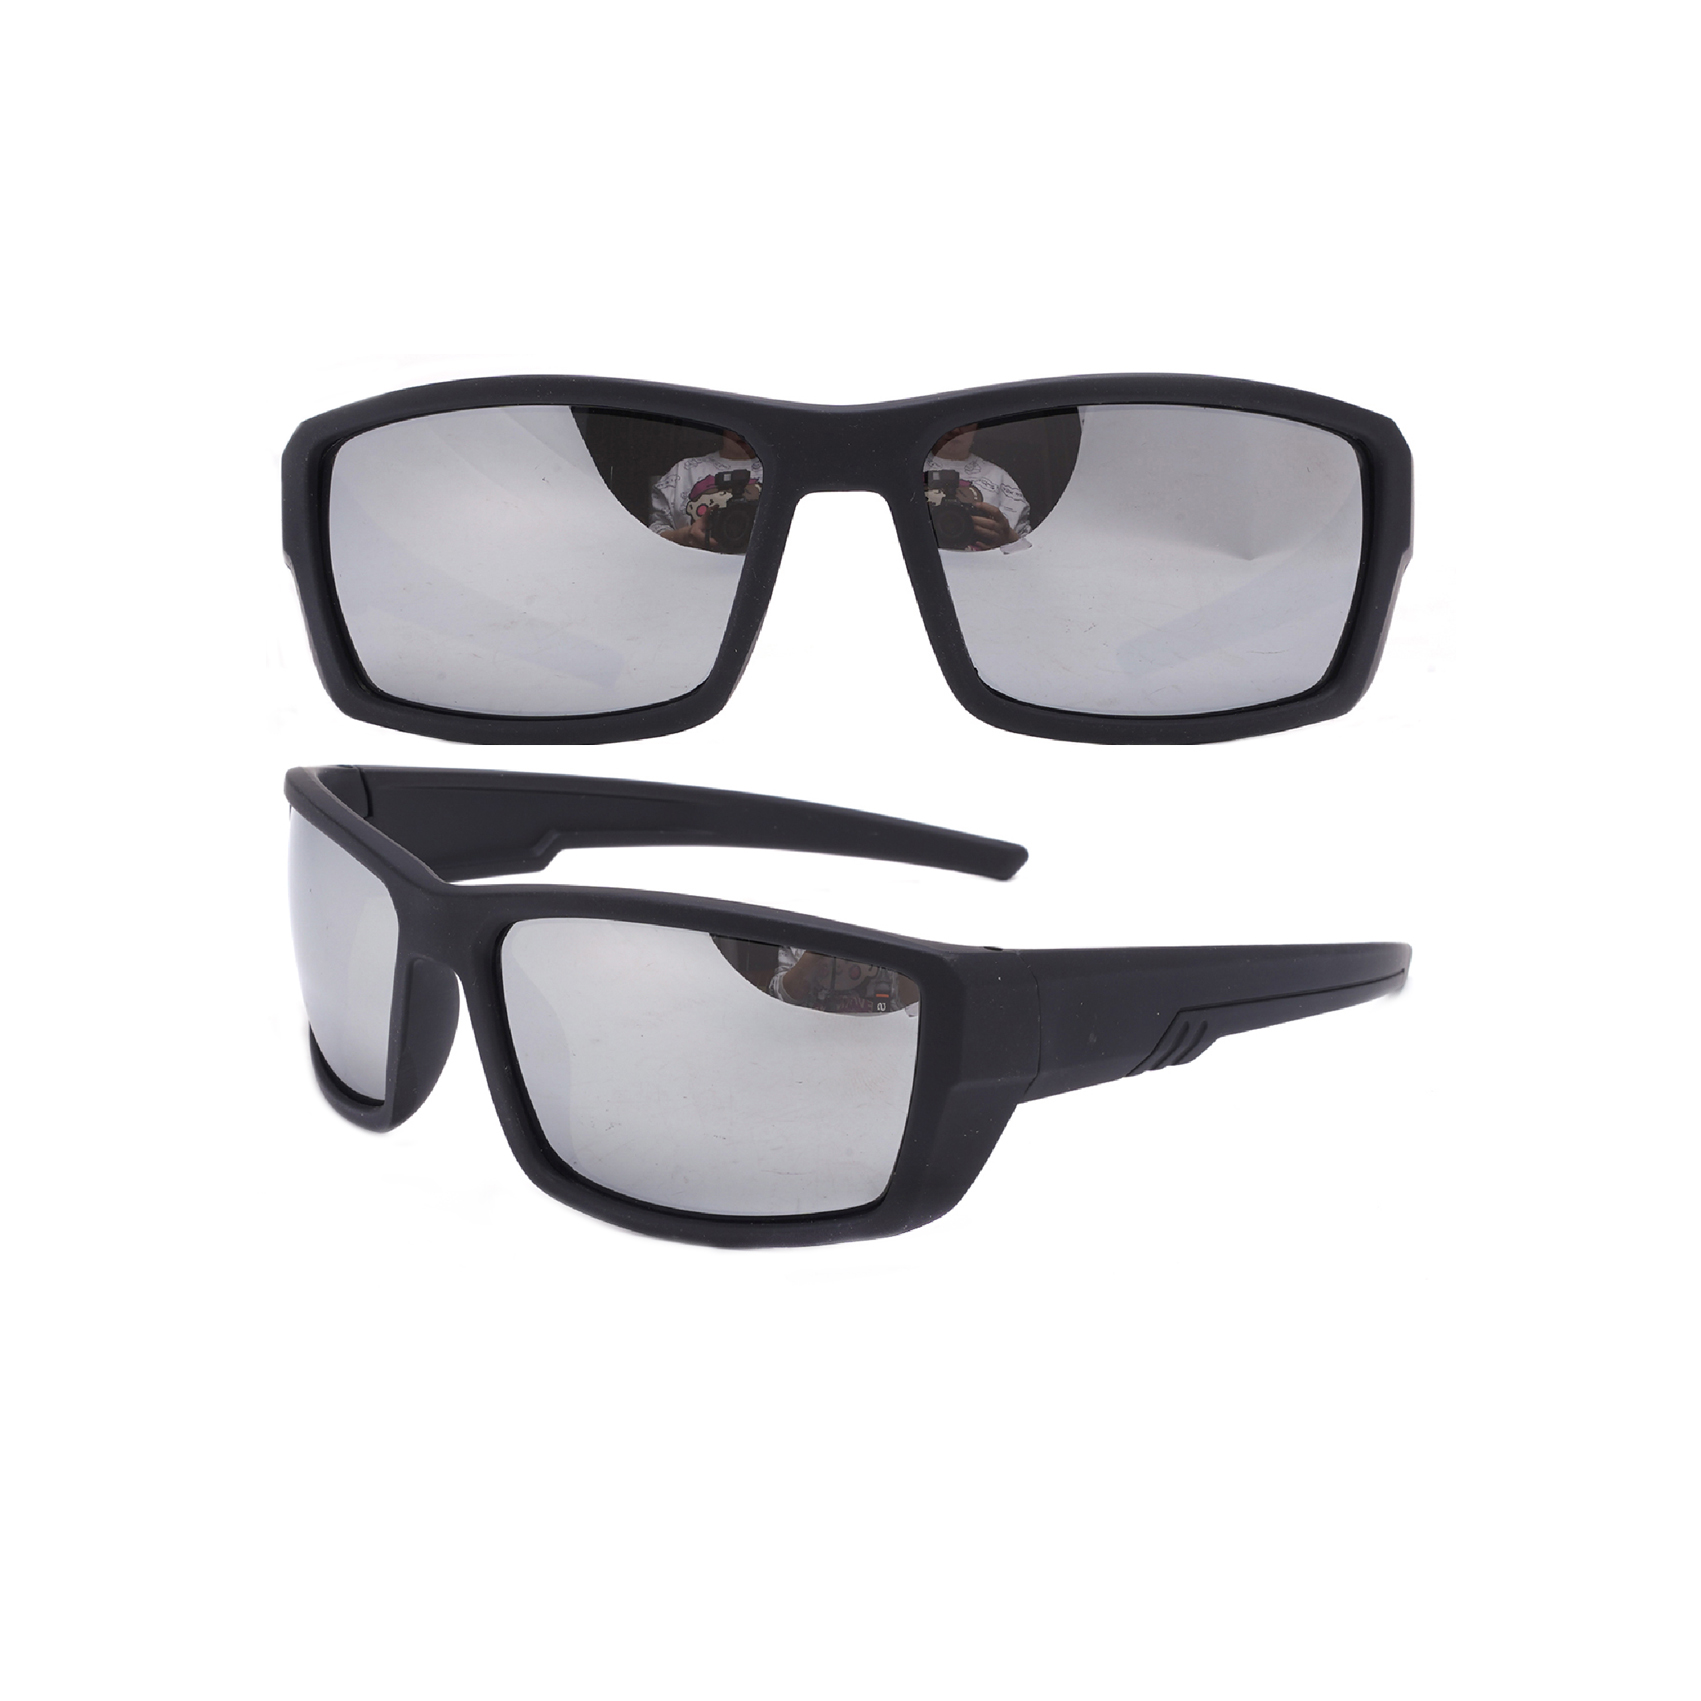 Vintage Black Prescription Sport Sunglasses for Men Sport Outdoor Sunglasses Manufacturer